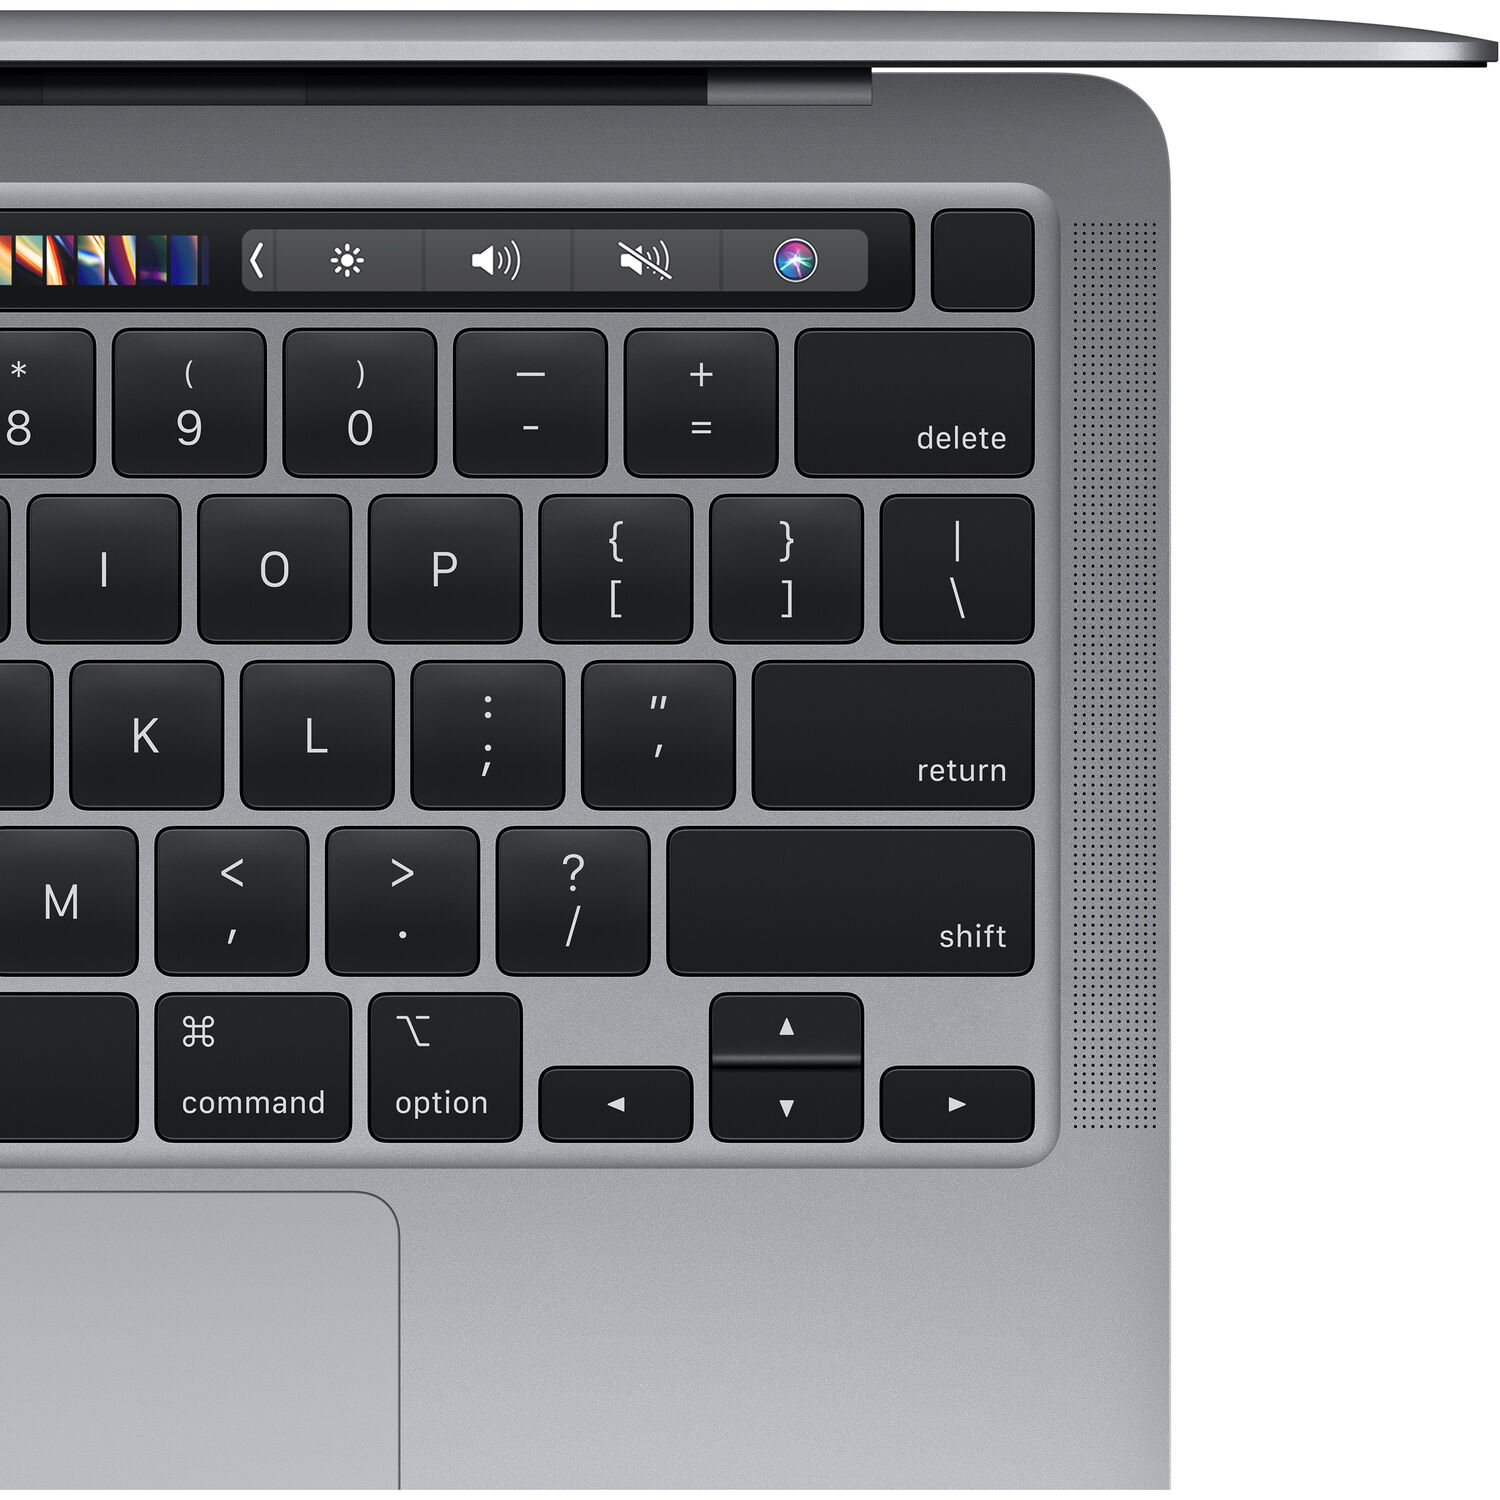 MYD82 - MacBook Pro 2020 13 Inch - Apple M1 8-Core / 8GB / 256GB - Space Gray 99%